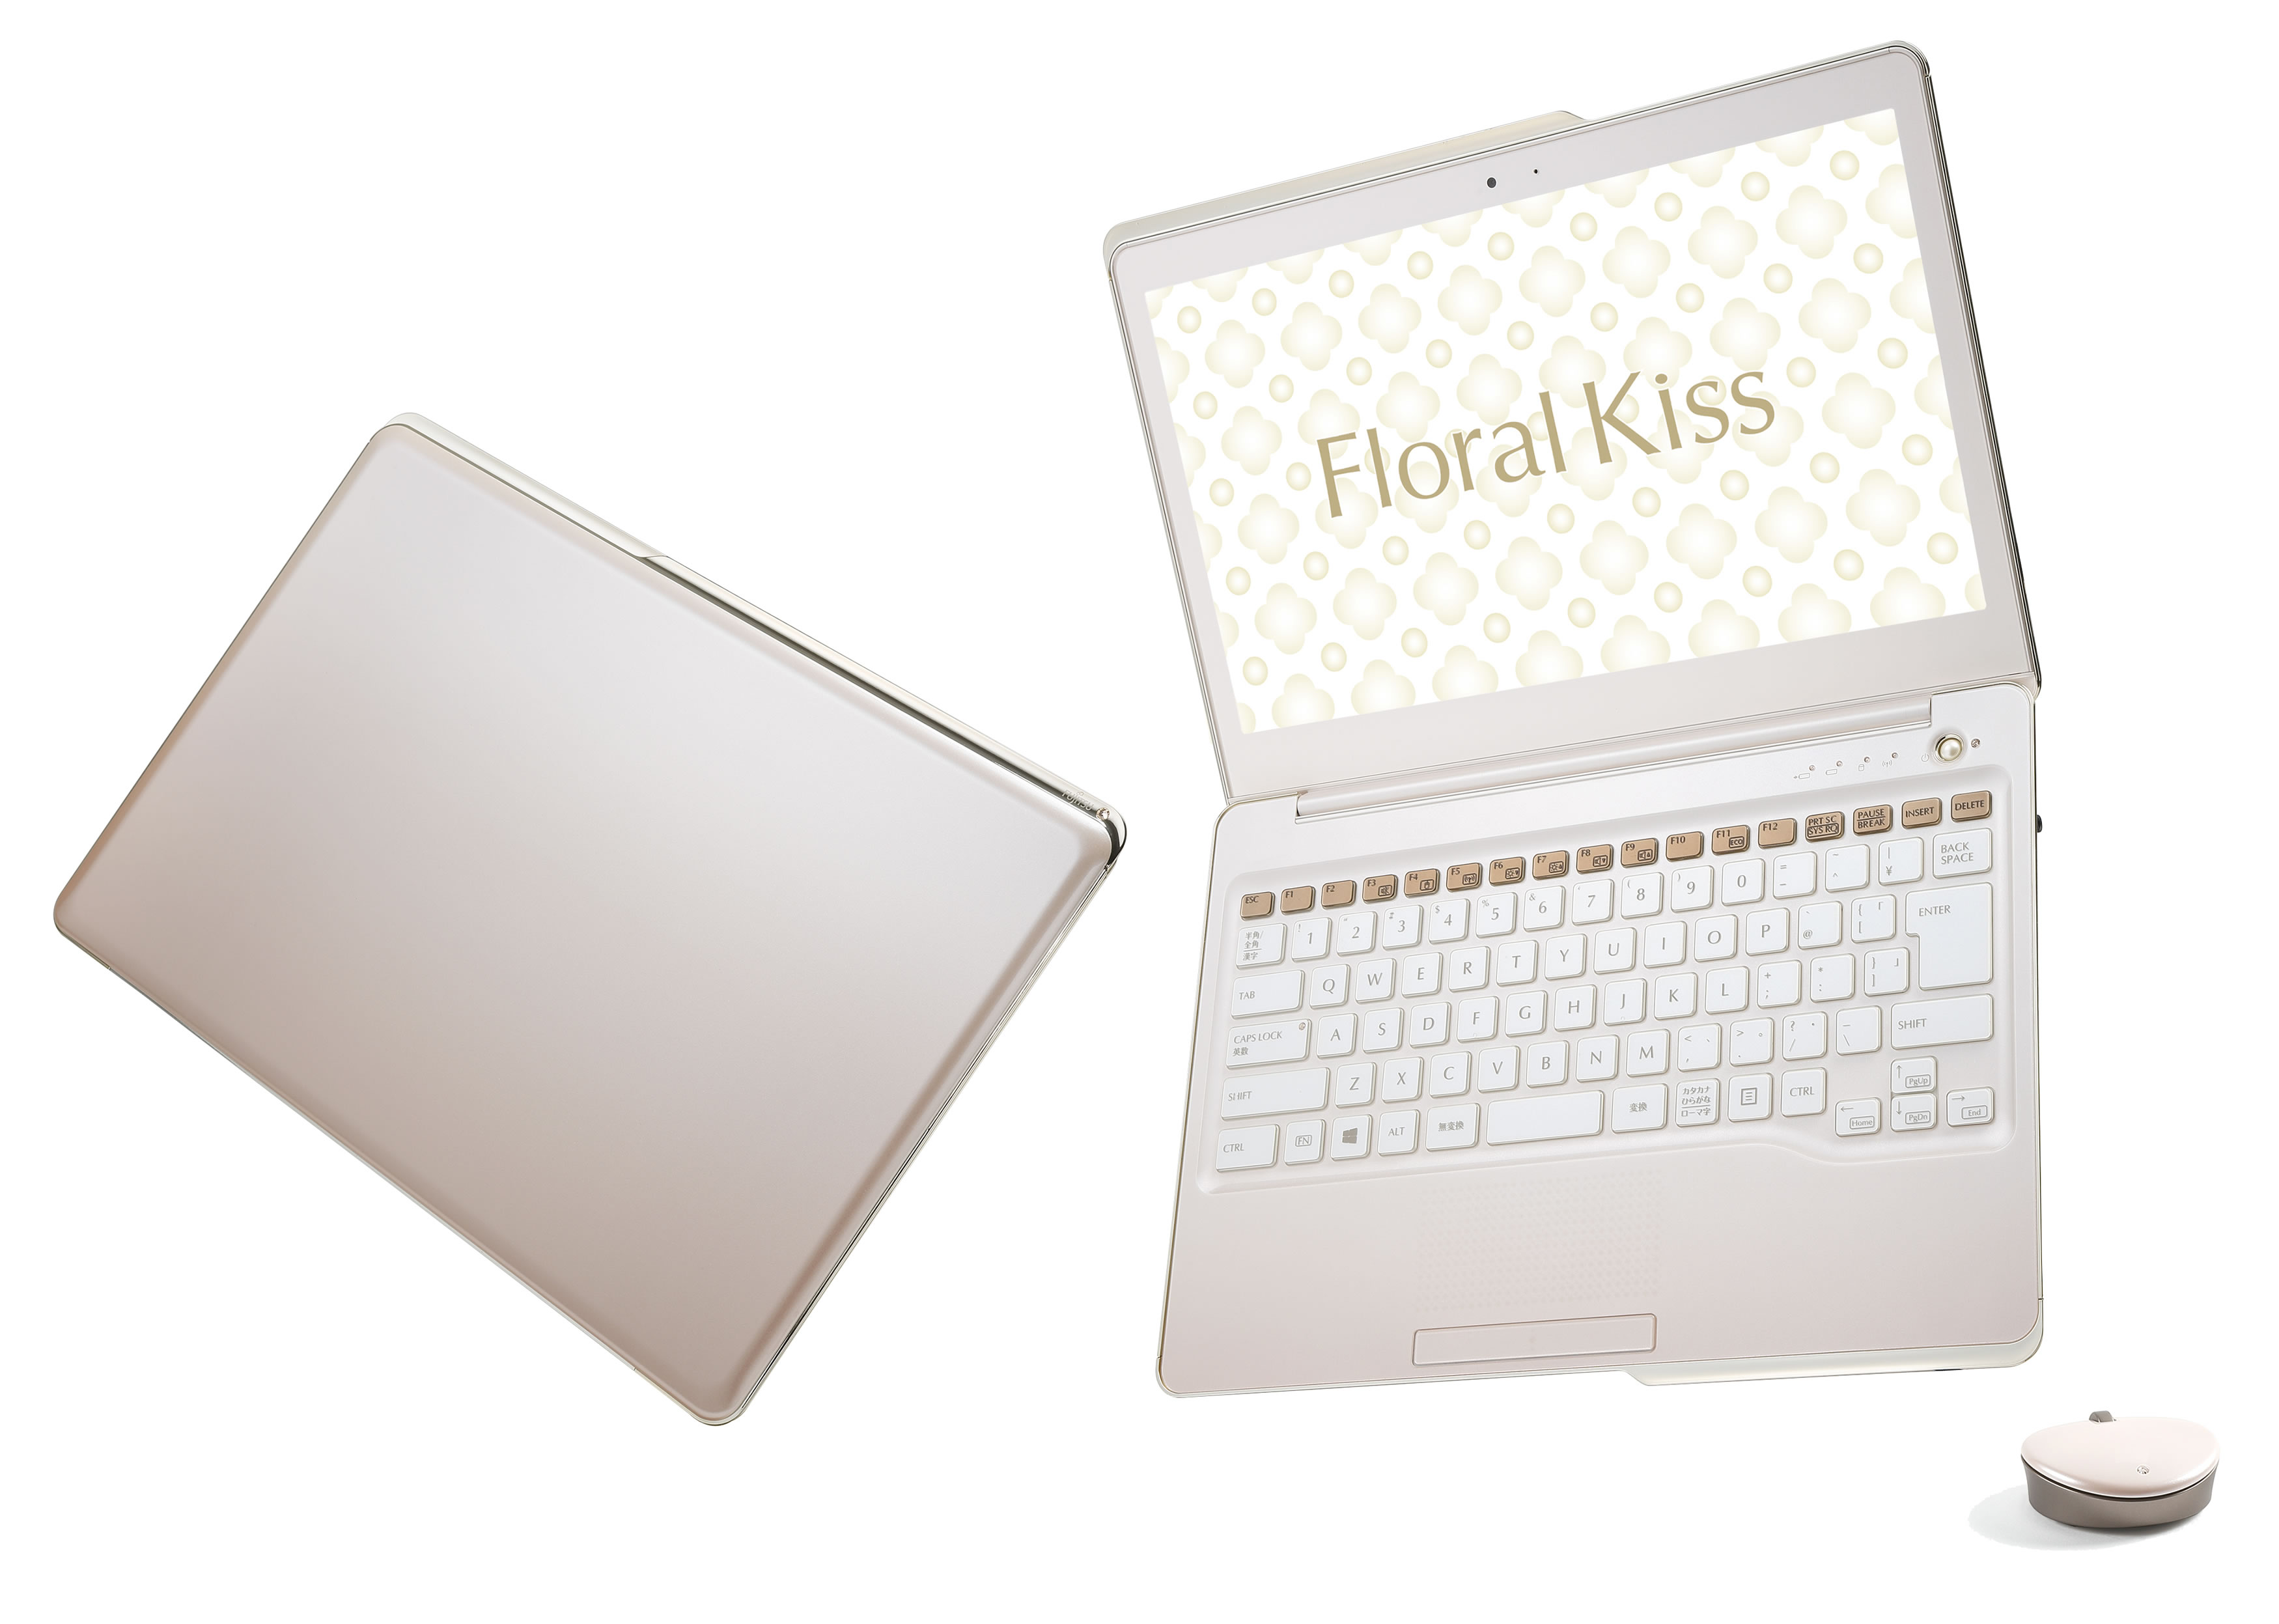 FUJITSU floral Kiss agate コラボ限定モデル